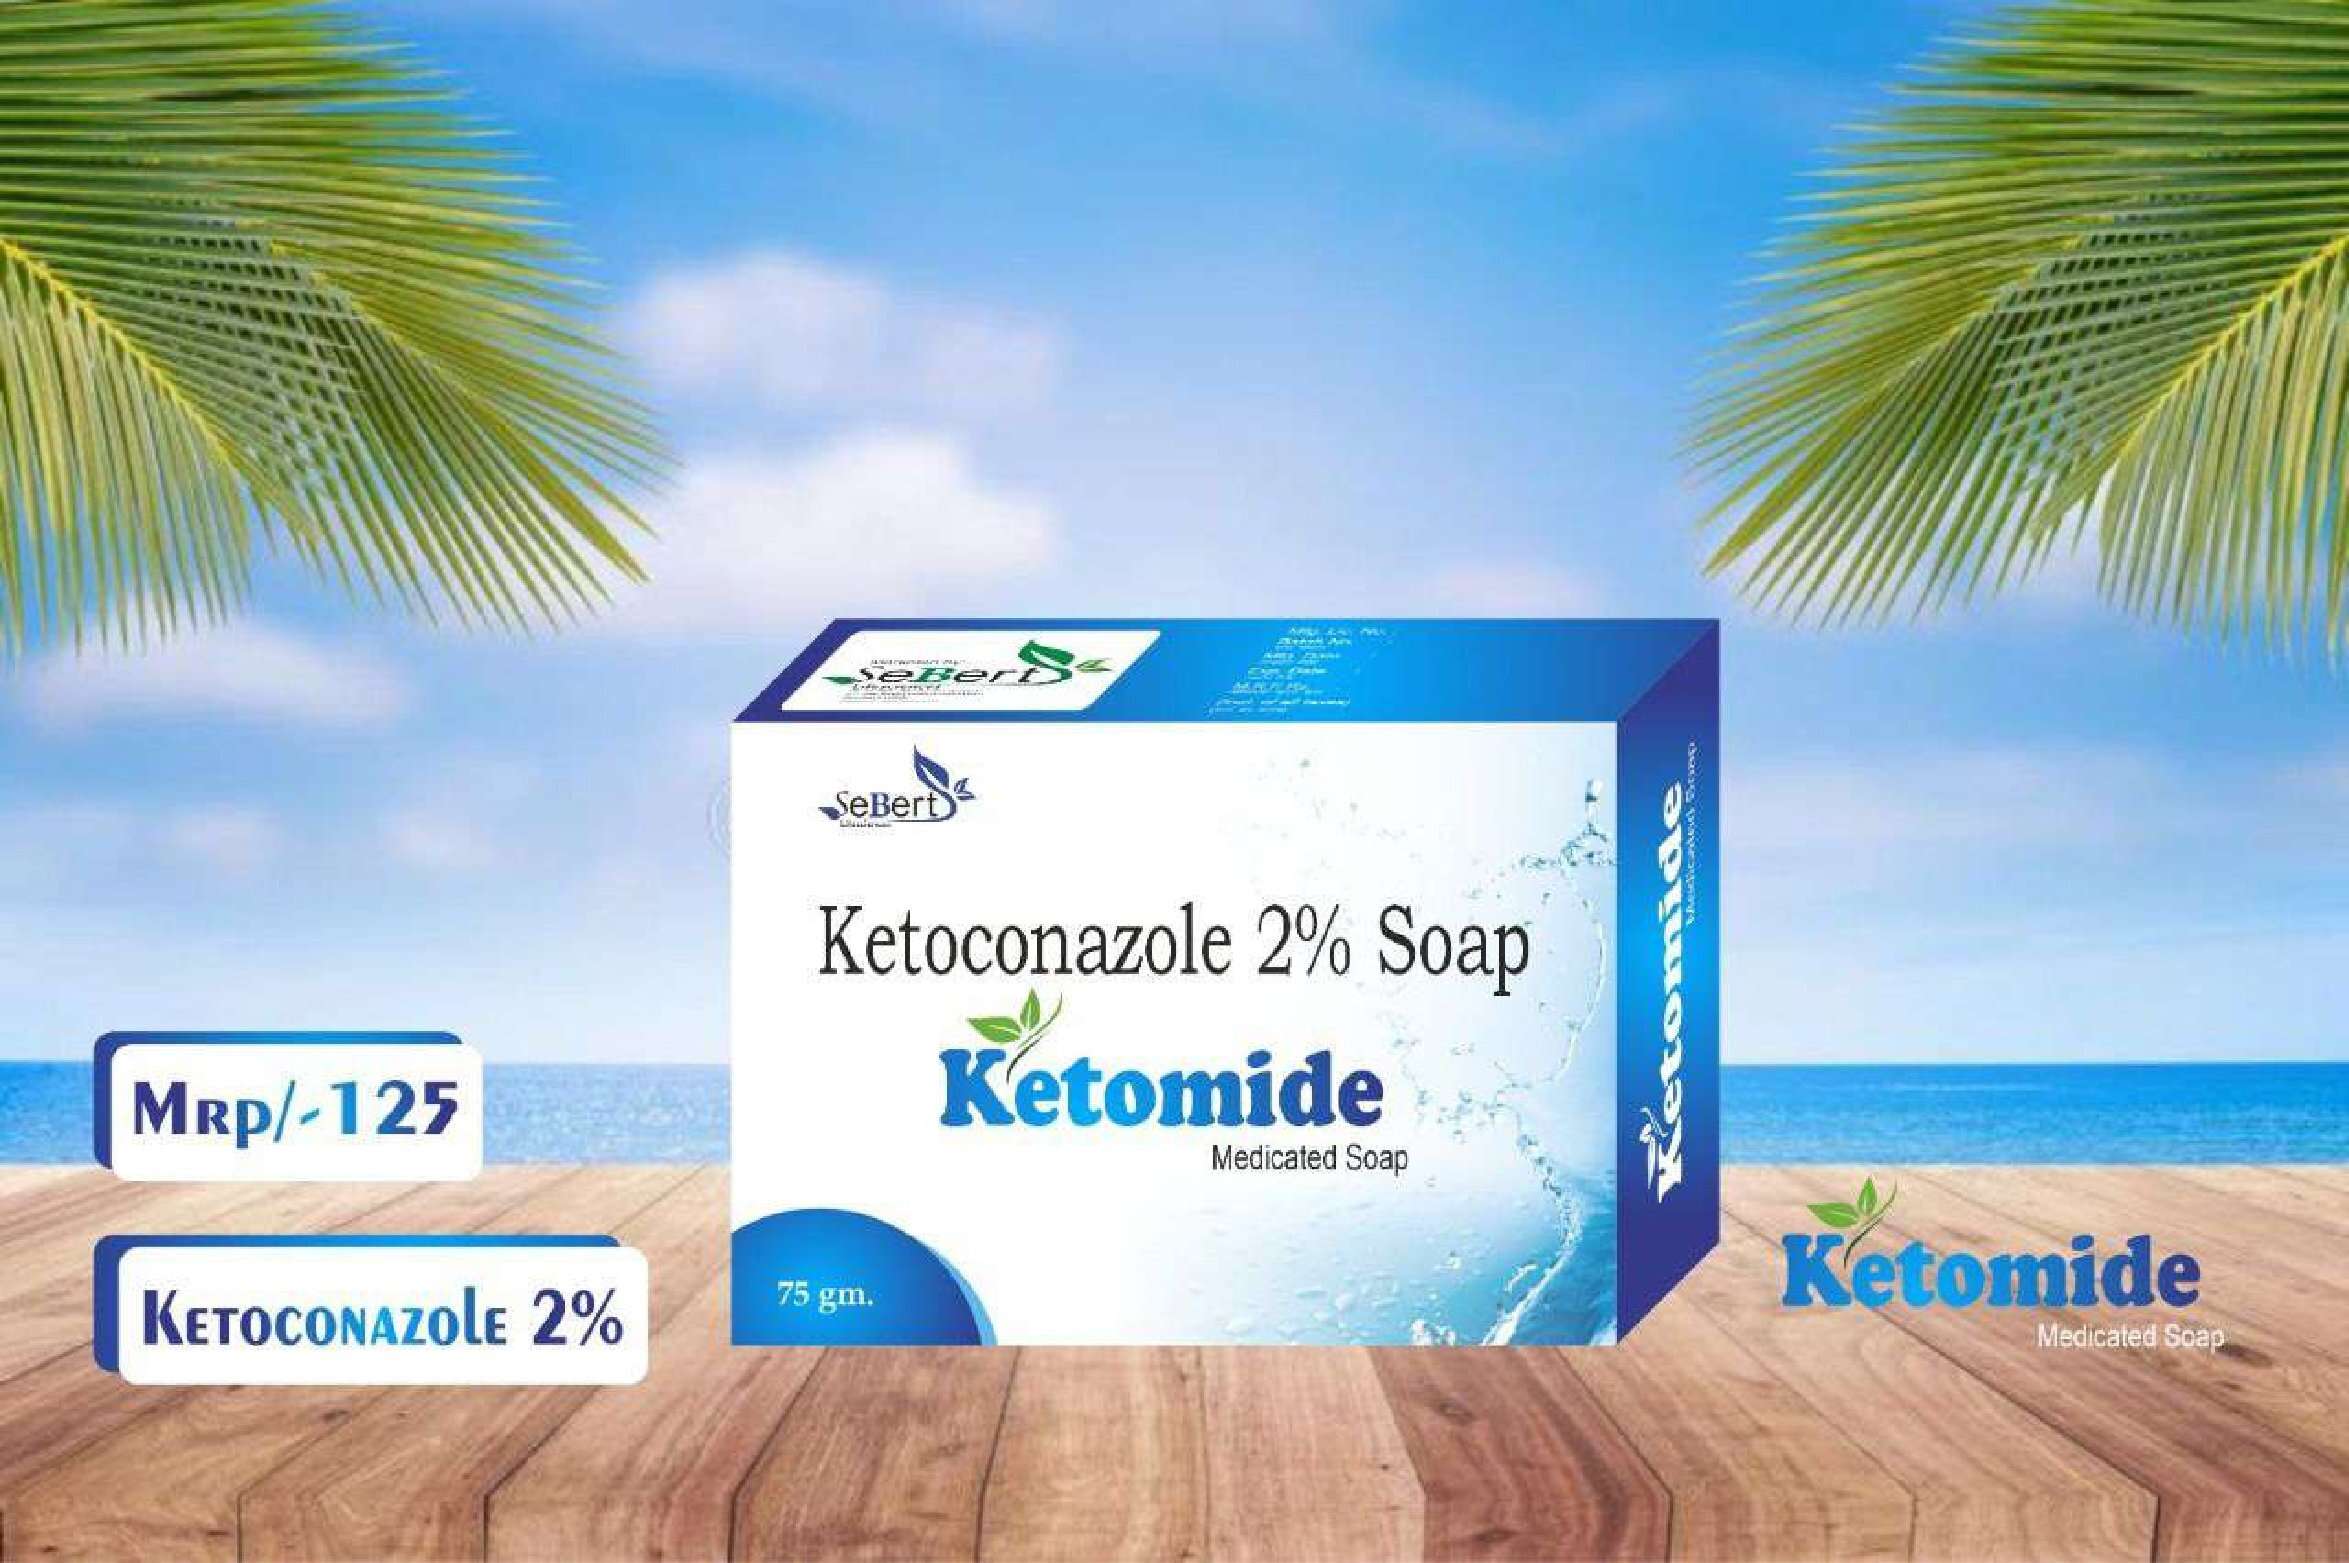 ketoconazole 2% soap